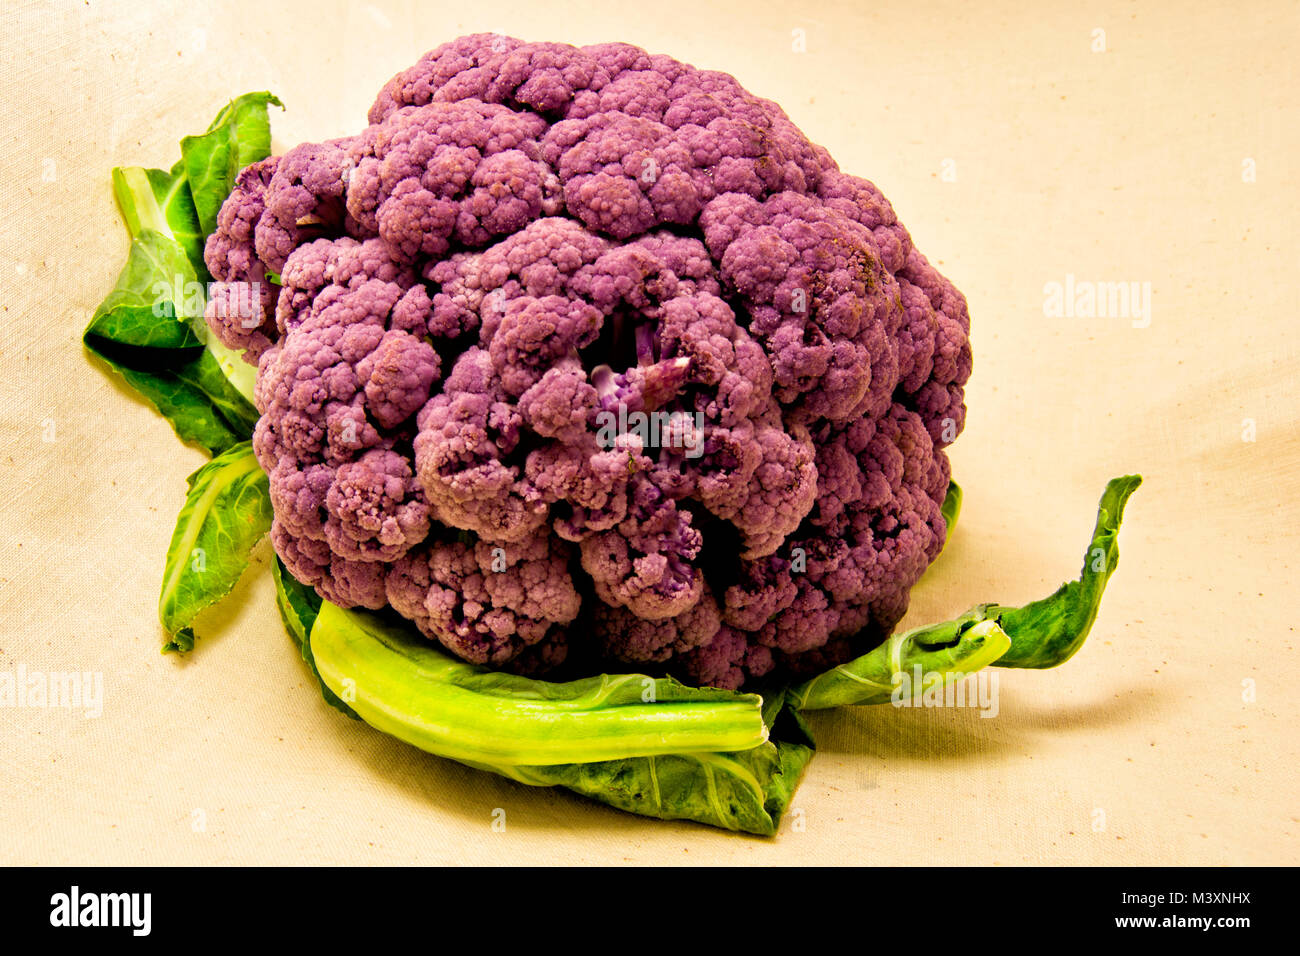 purple cauliflower with green leaves - Brassica oleracea, Botrytis Stock Photo